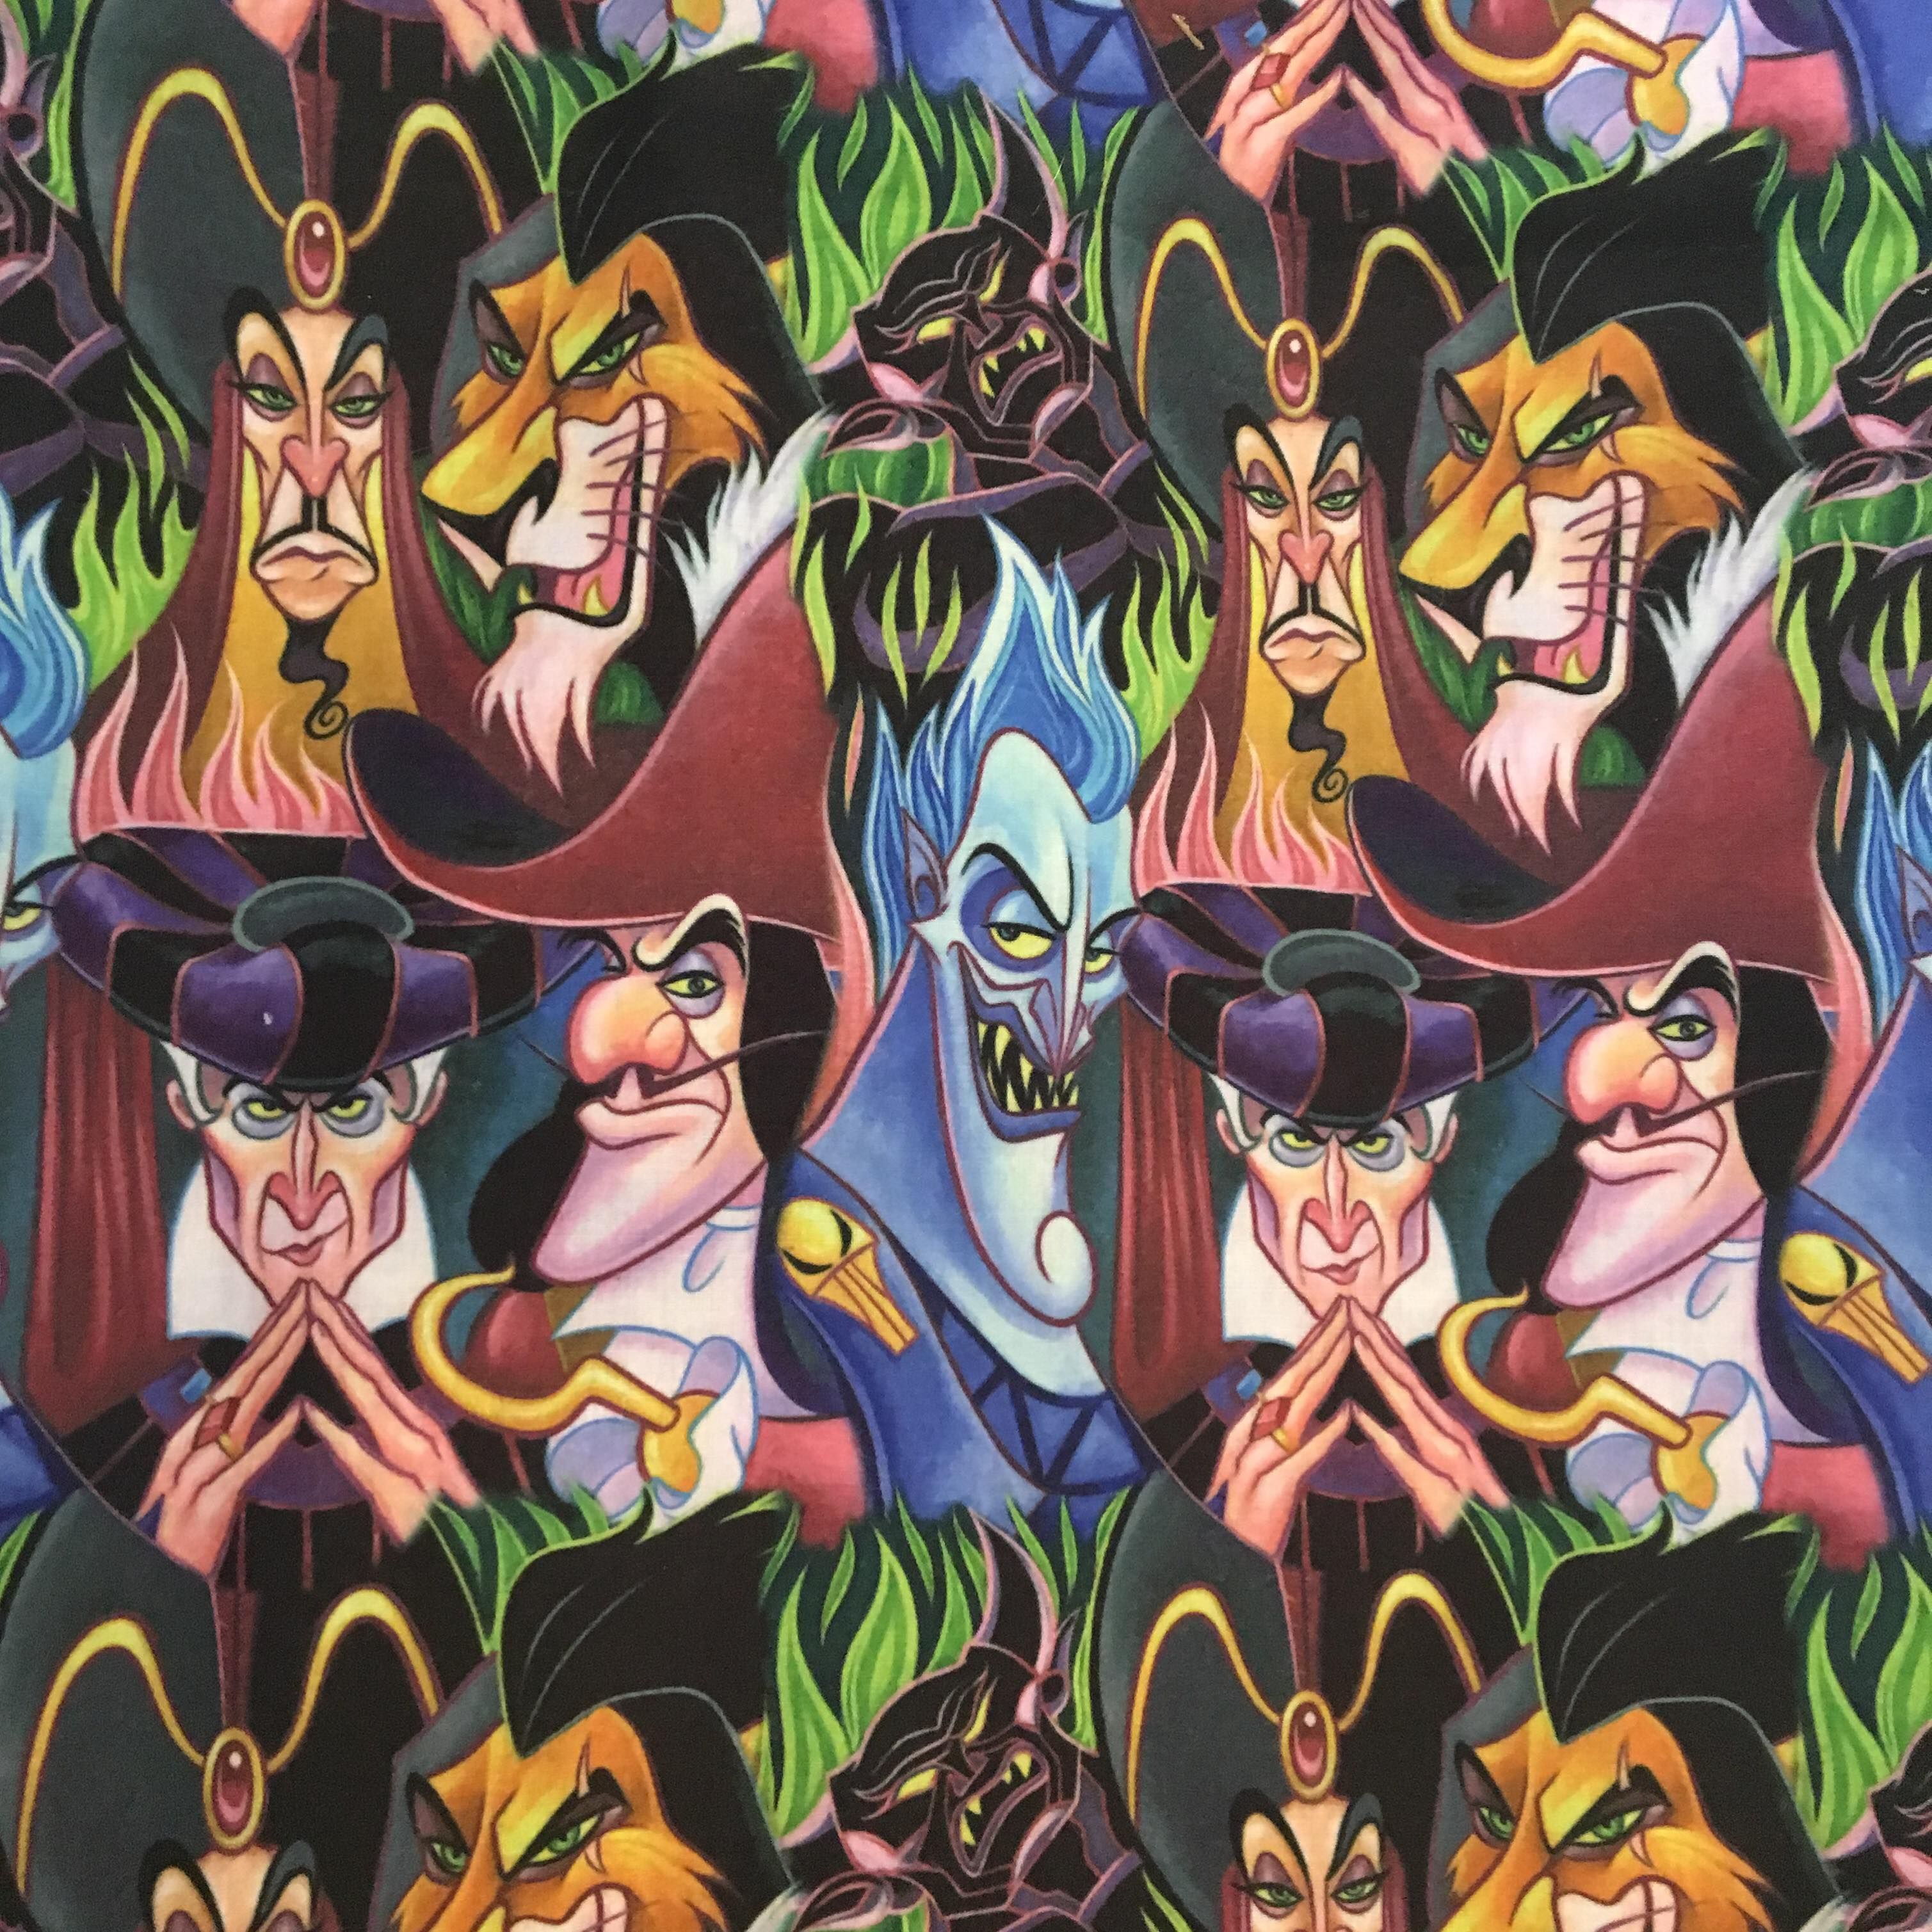 Disney Villain Wallpaper images